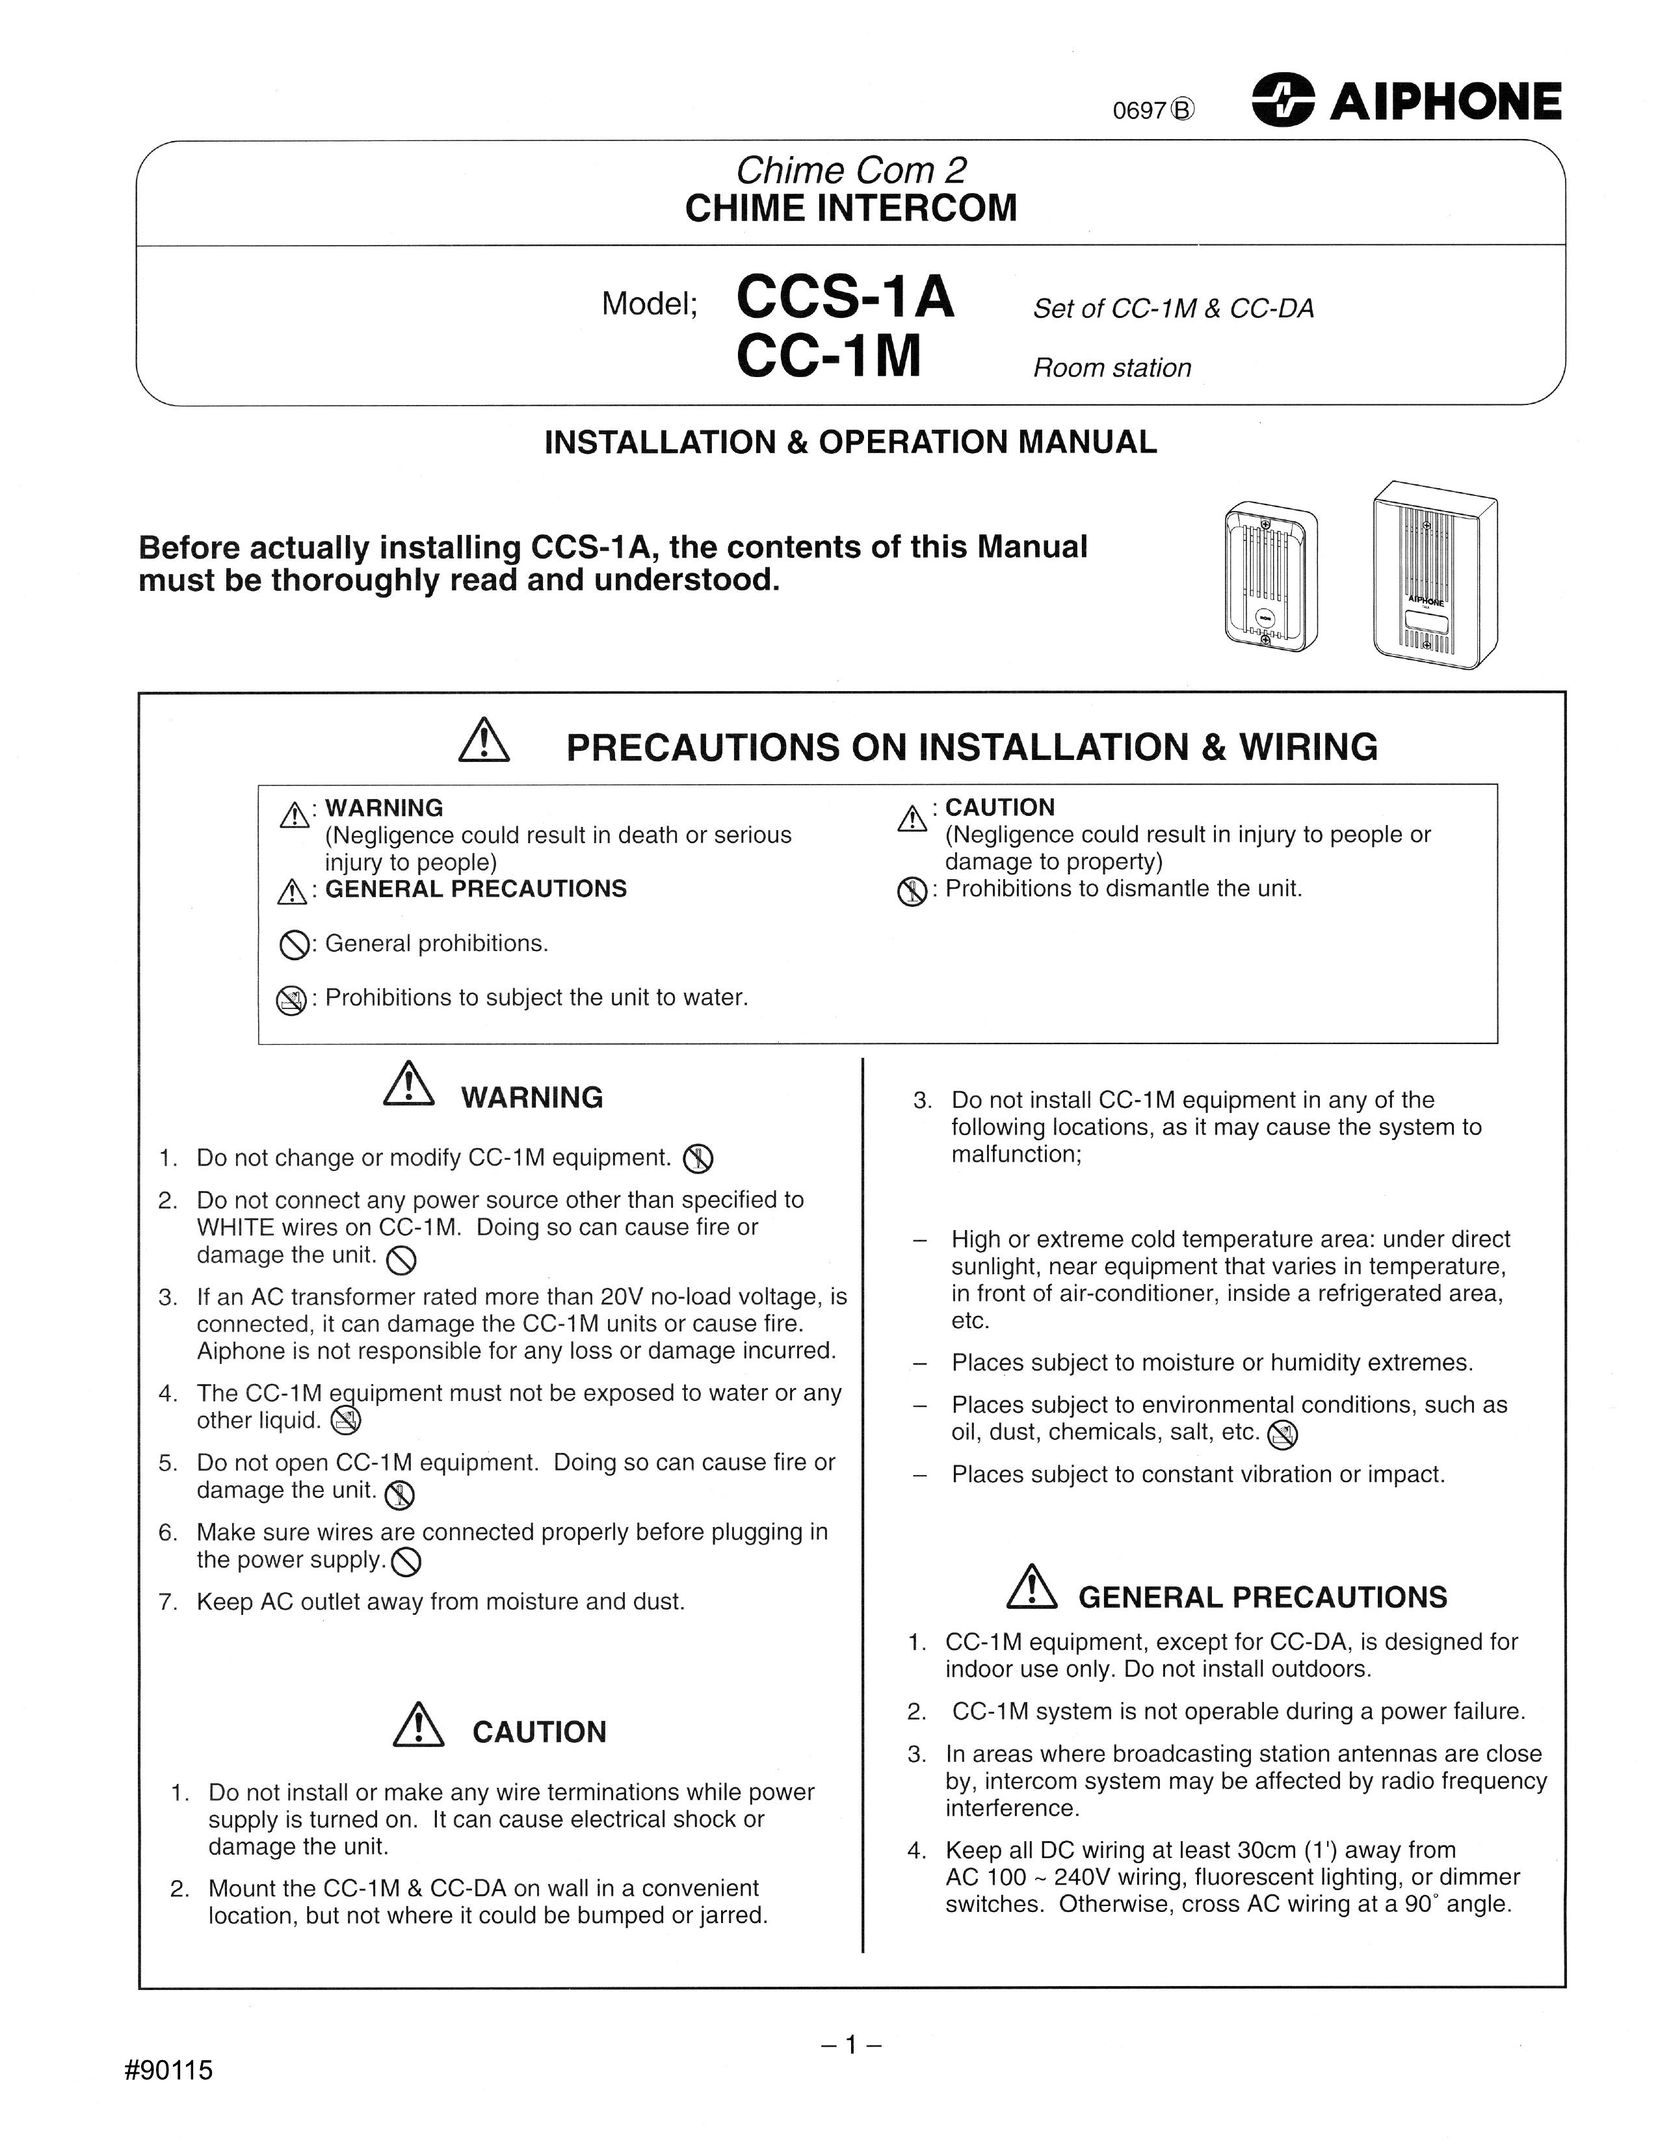 Aiphone CC-1M Intercom System User Manual